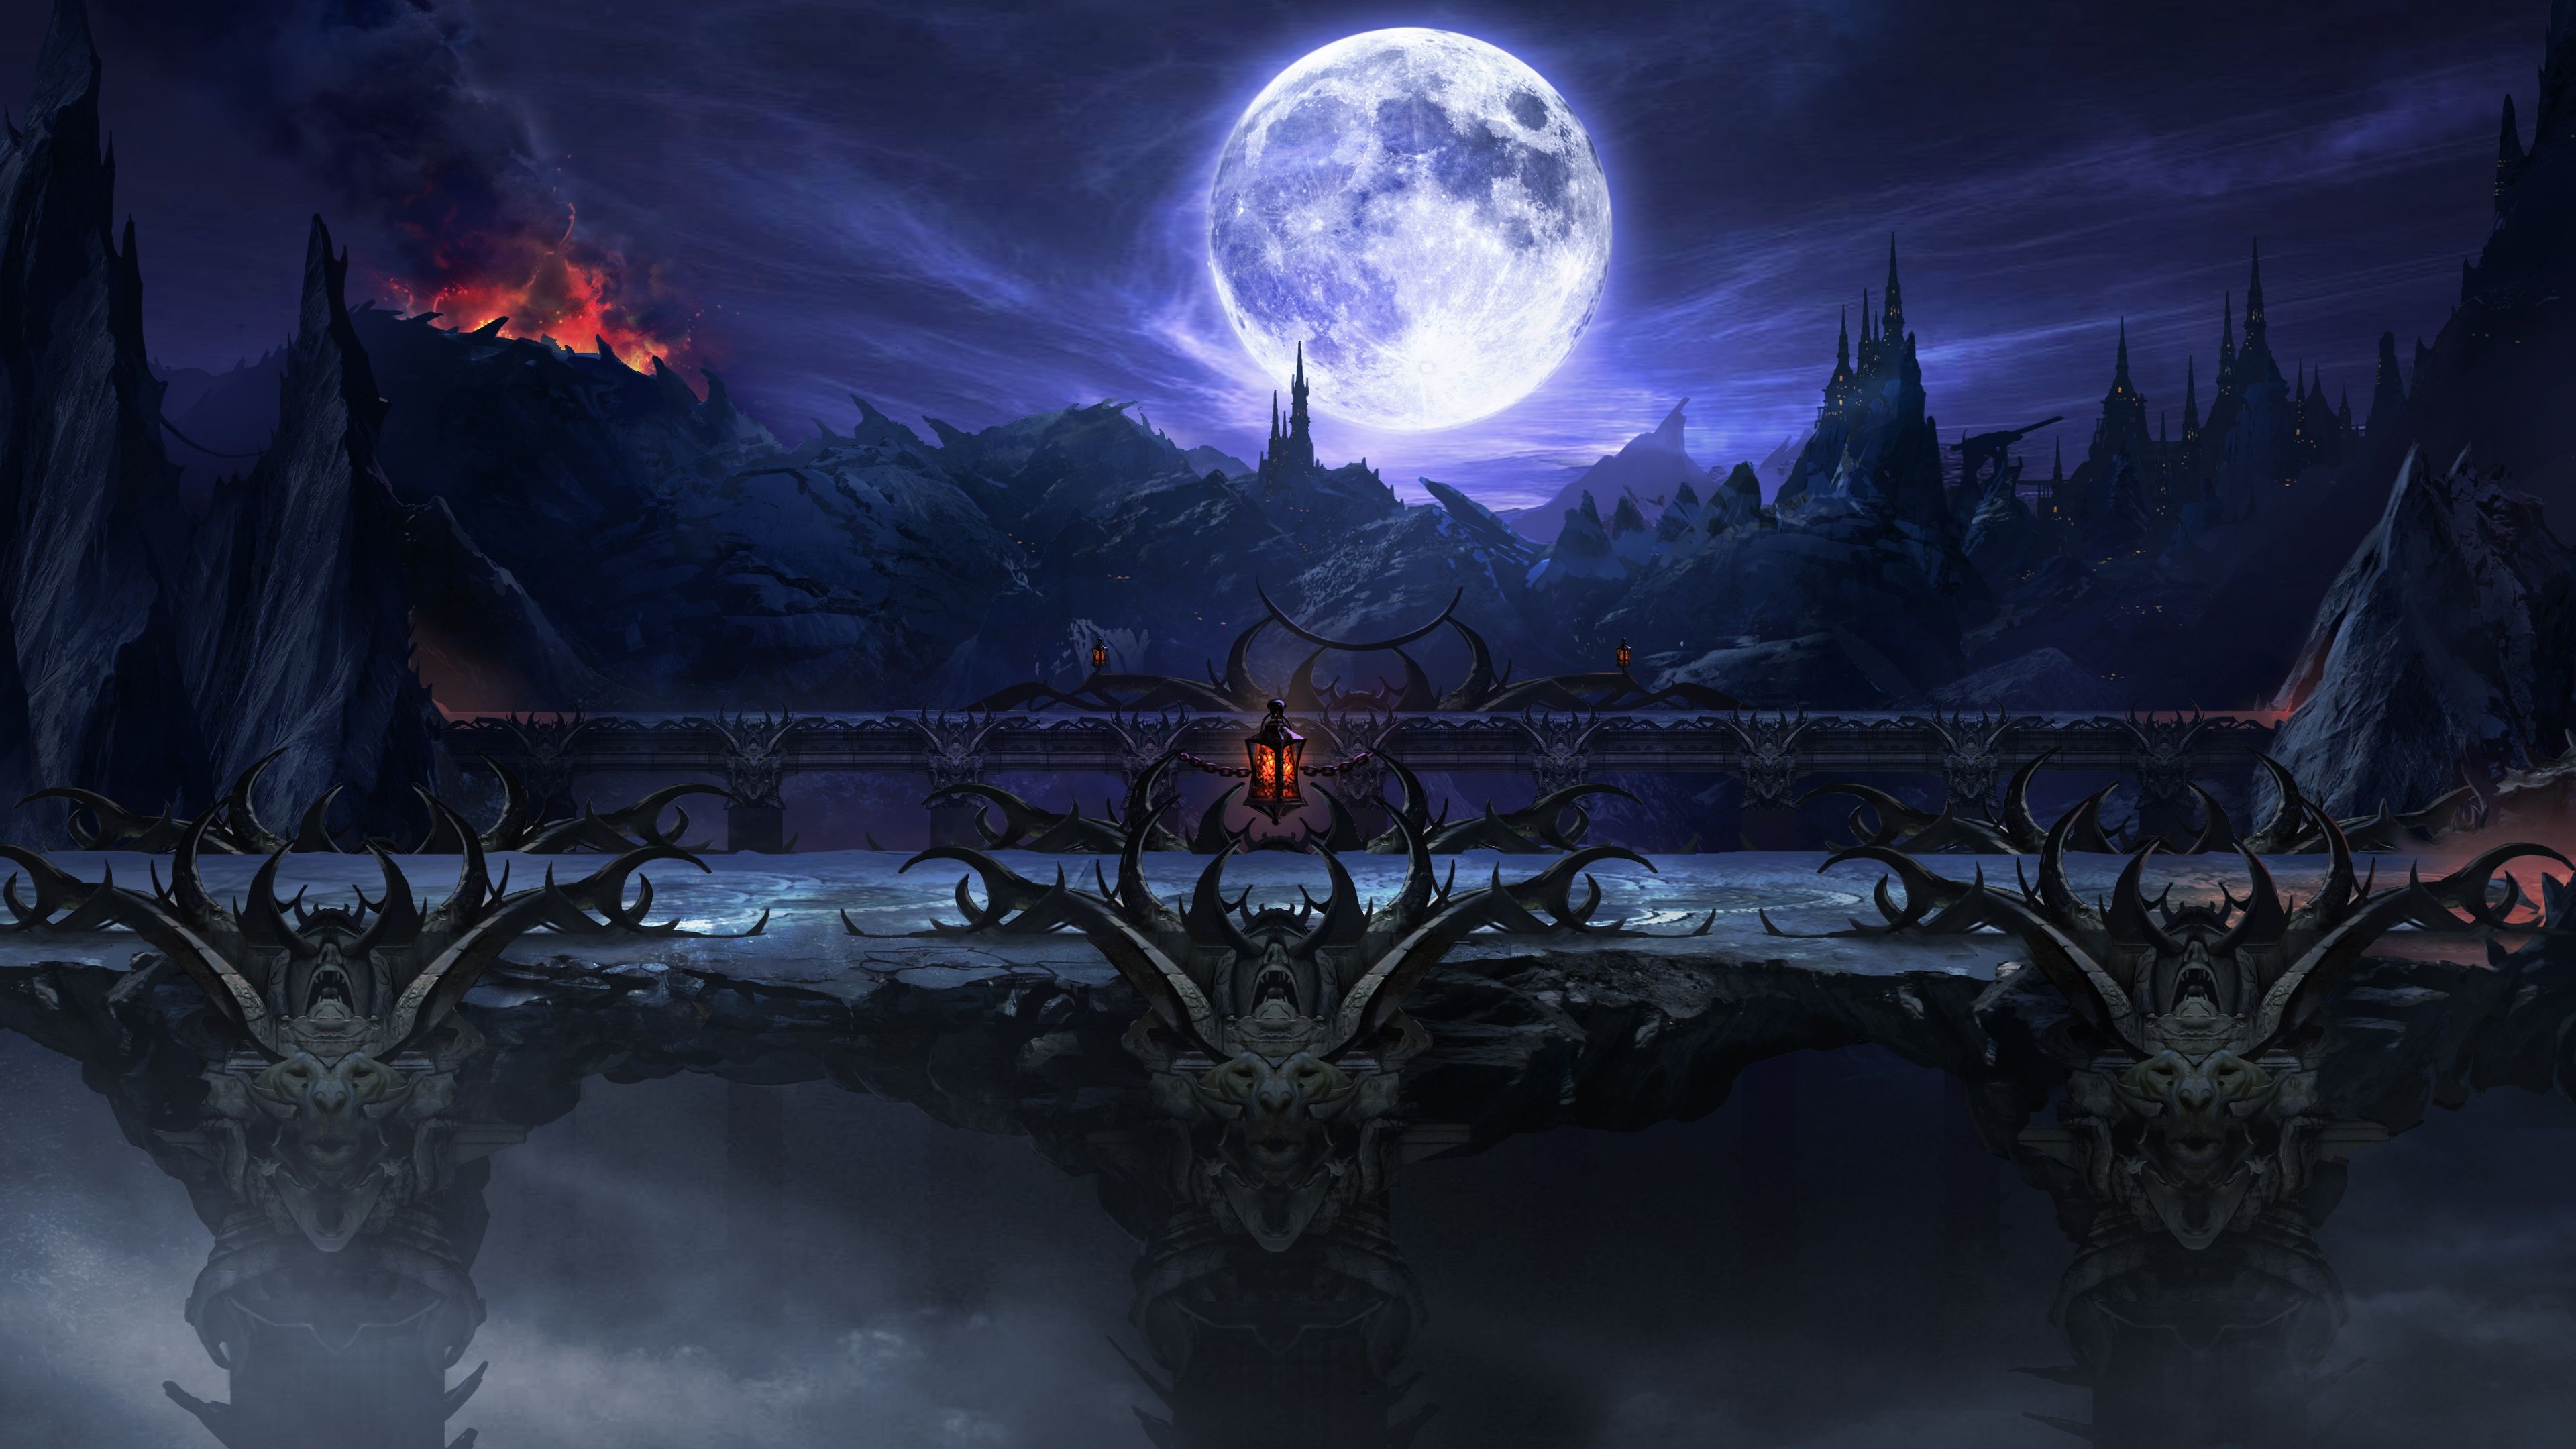 47 Mortal Kombat X HD Wallpapers Backgrounds - Wallpaper Abyss